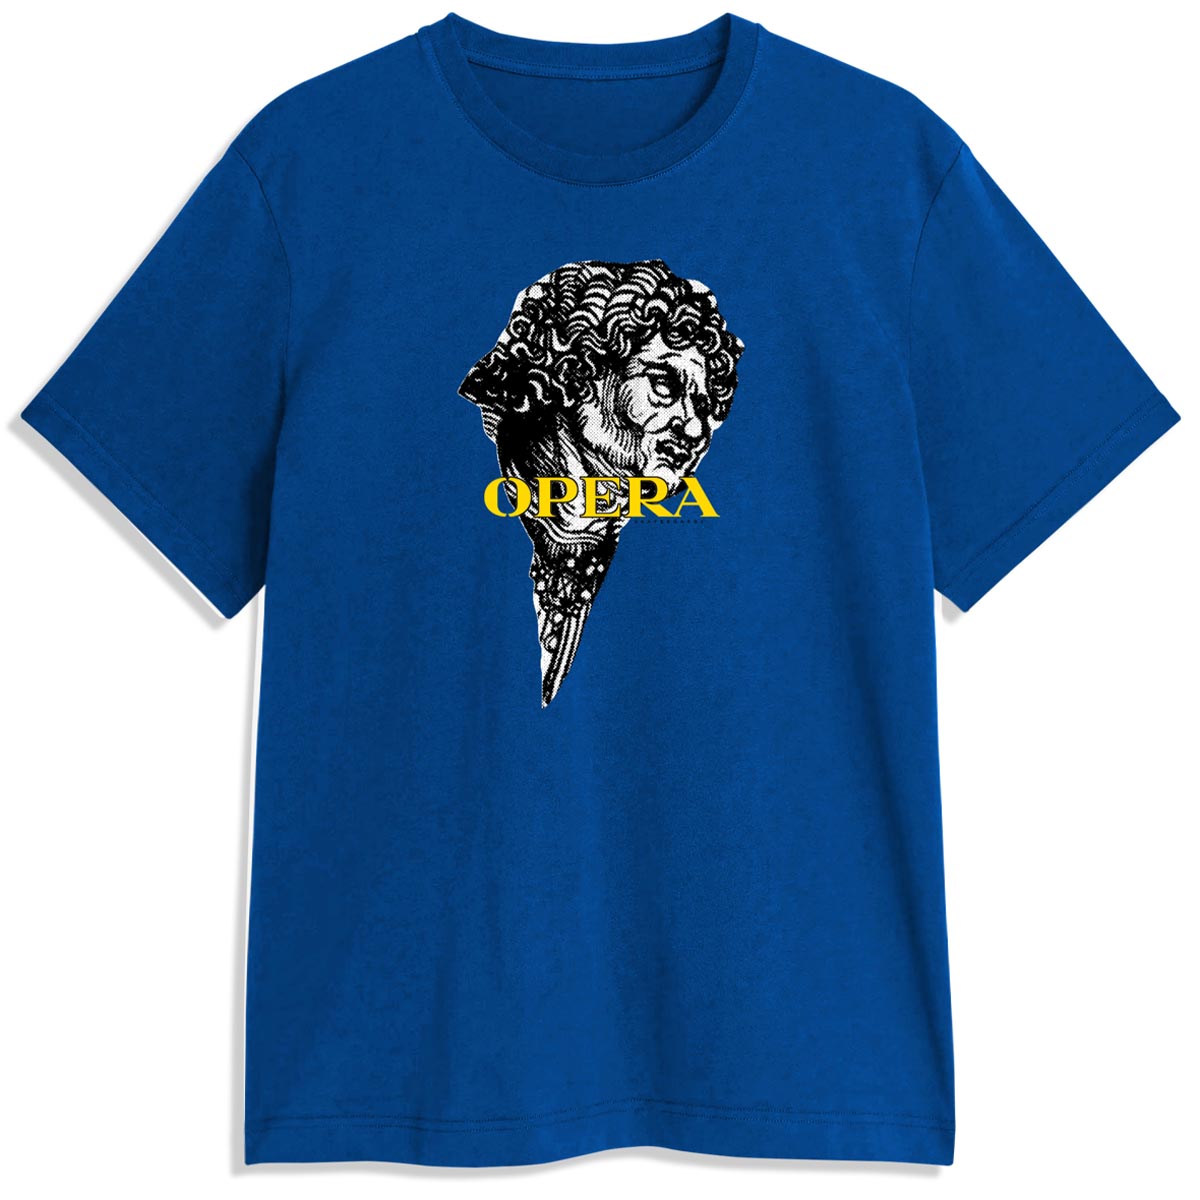 Opera Torn T-Shirt - Royal Blue image 1